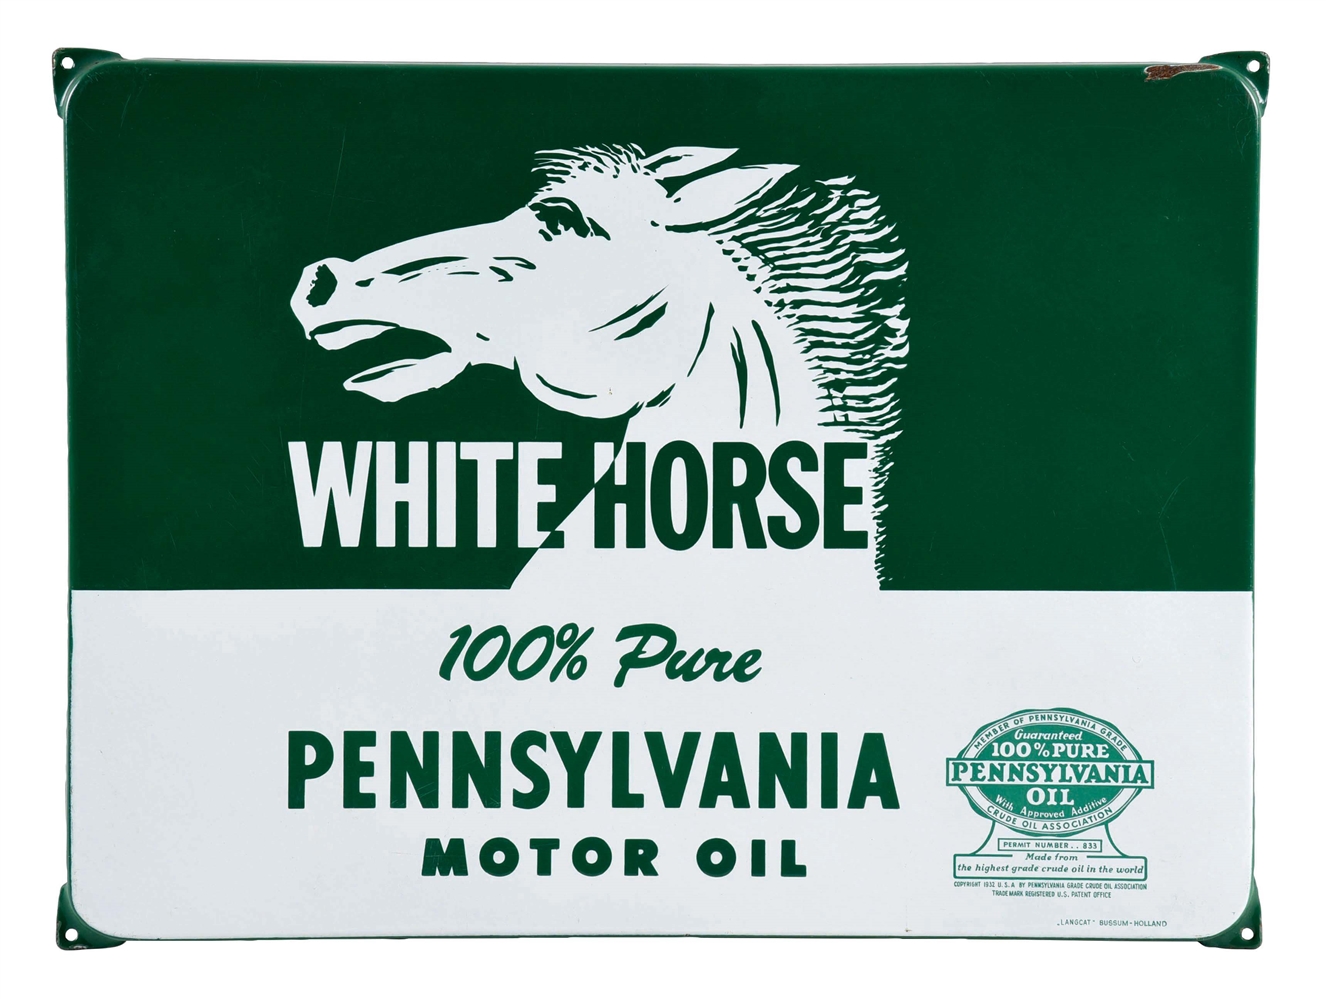 WHITE HORSE MOTOR OIL PORCELAIN SIGN W/ HORSE GRAPHIC.  